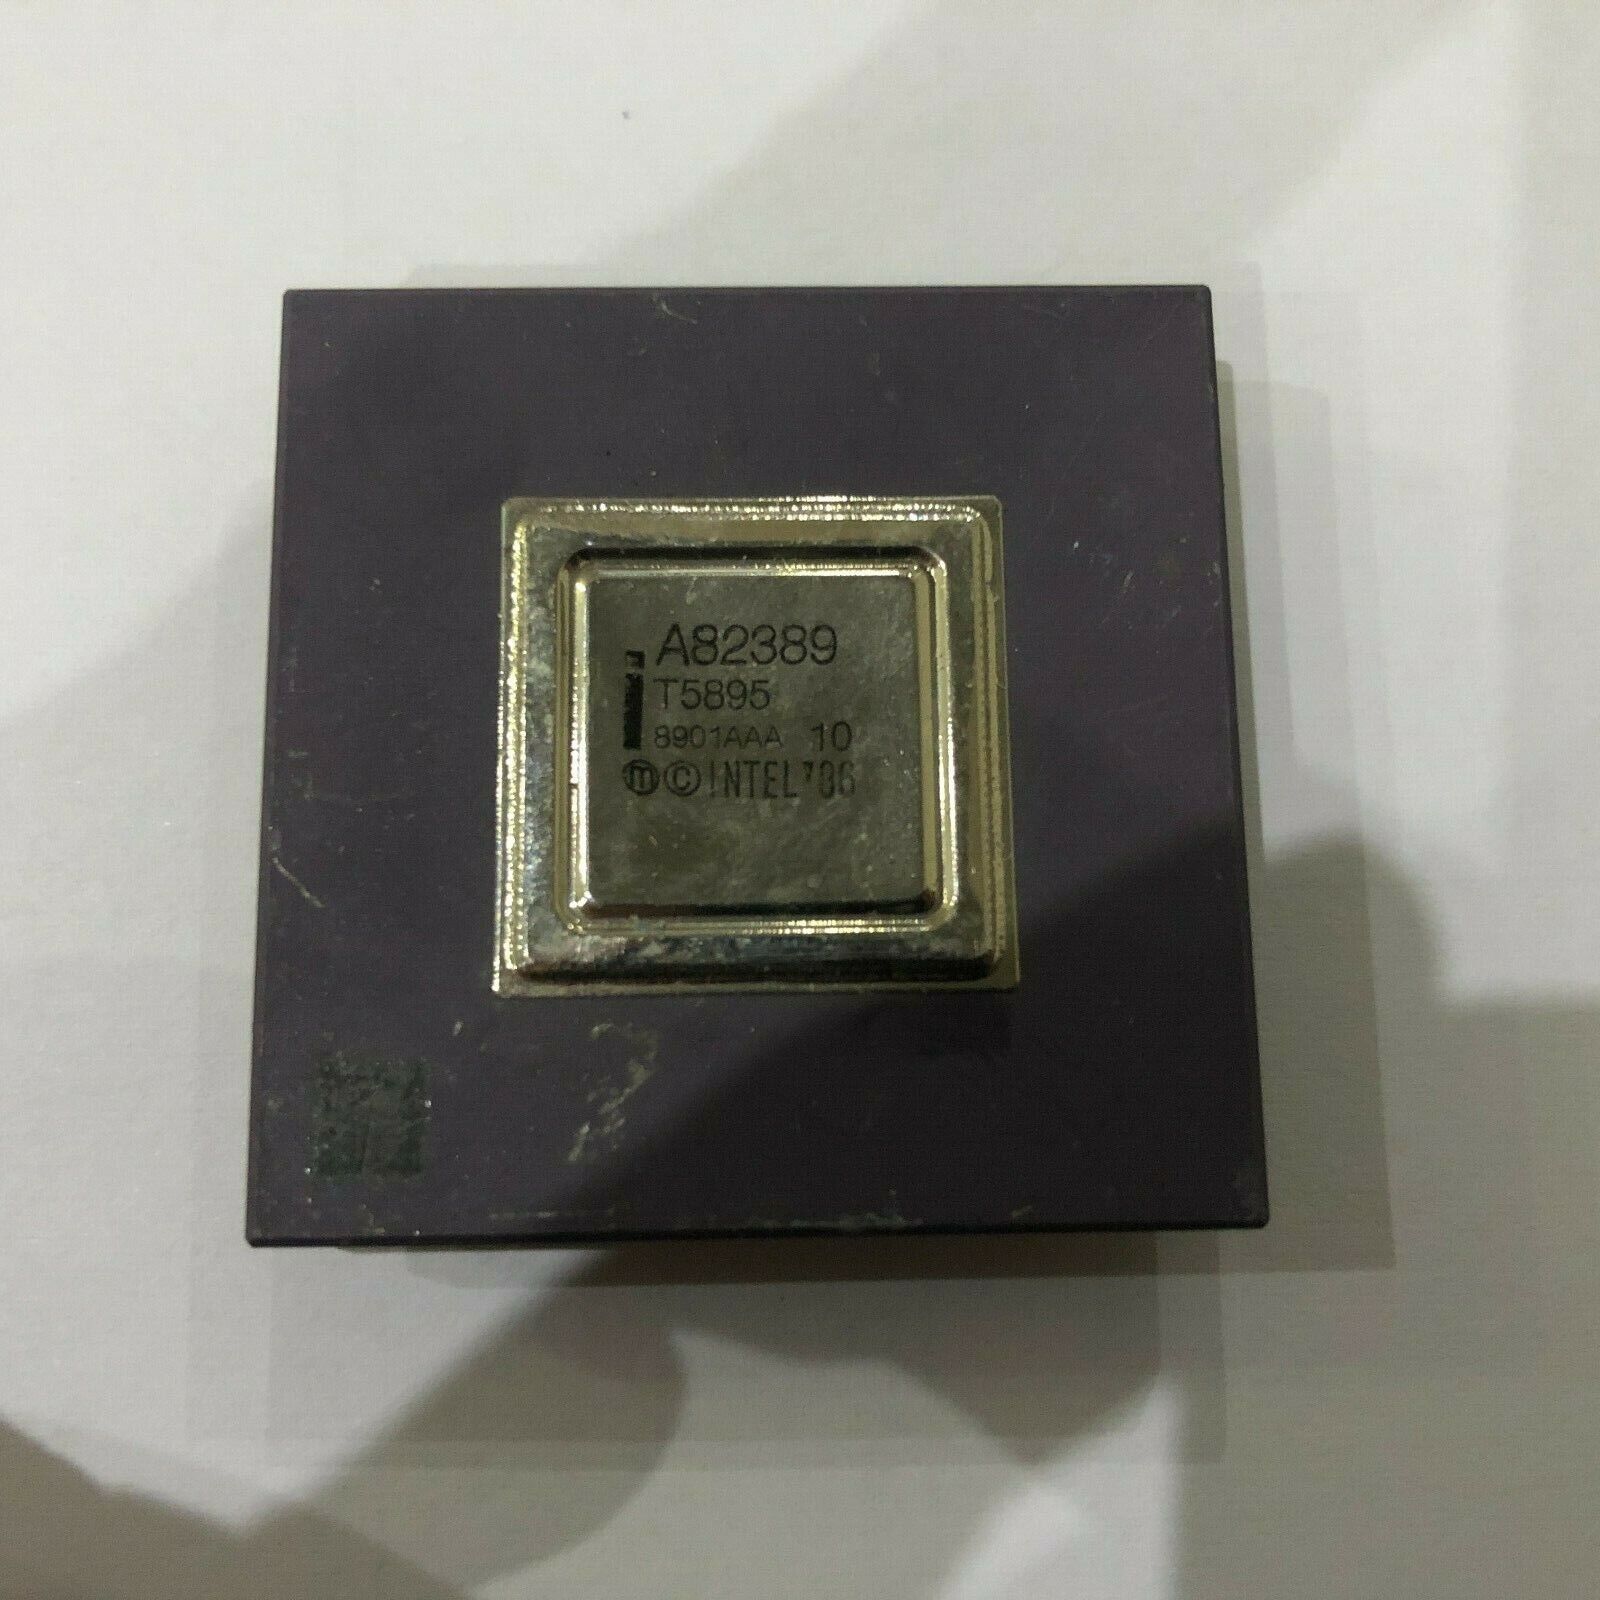 1x CPU INTEL 86 A82389 T5895` JAPAN VINTAGE CERAMIC